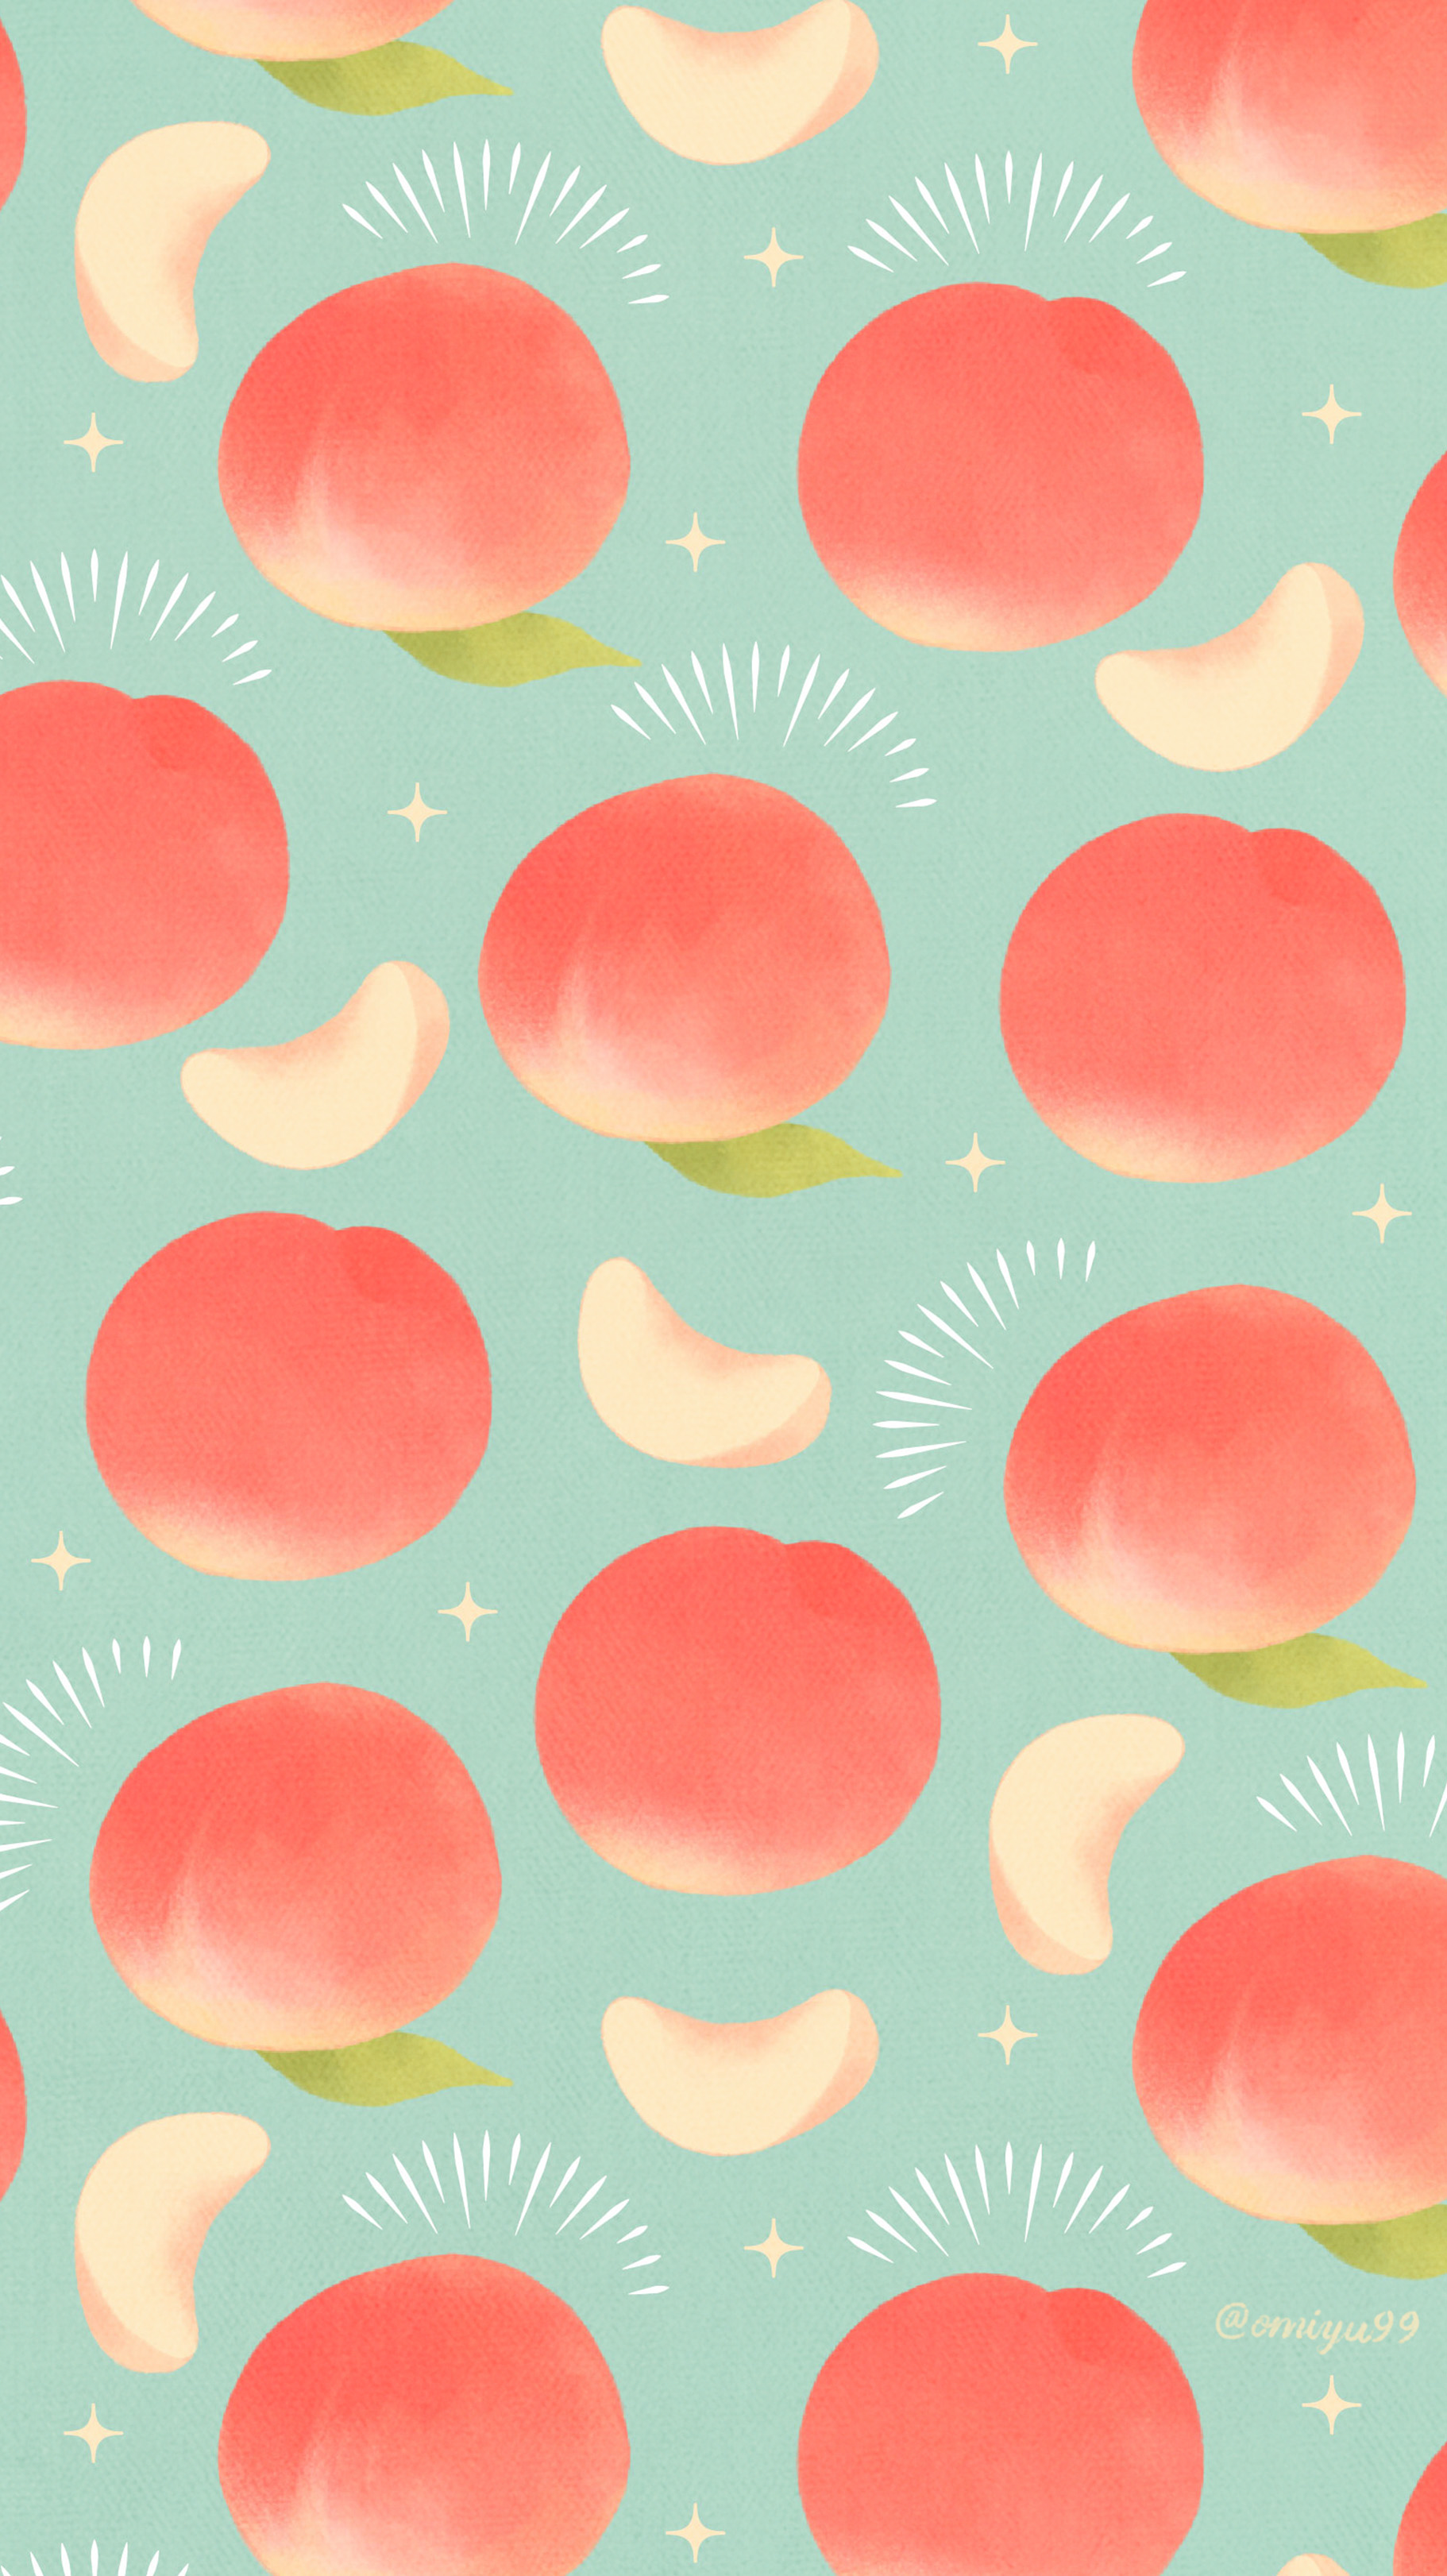 Omiyu ピーチな壁紙 Illust Illustration 壁紙 イラスト Iphone壁紙 桃 Peach 食べ物 T Co 44dcpbdzve Twitter